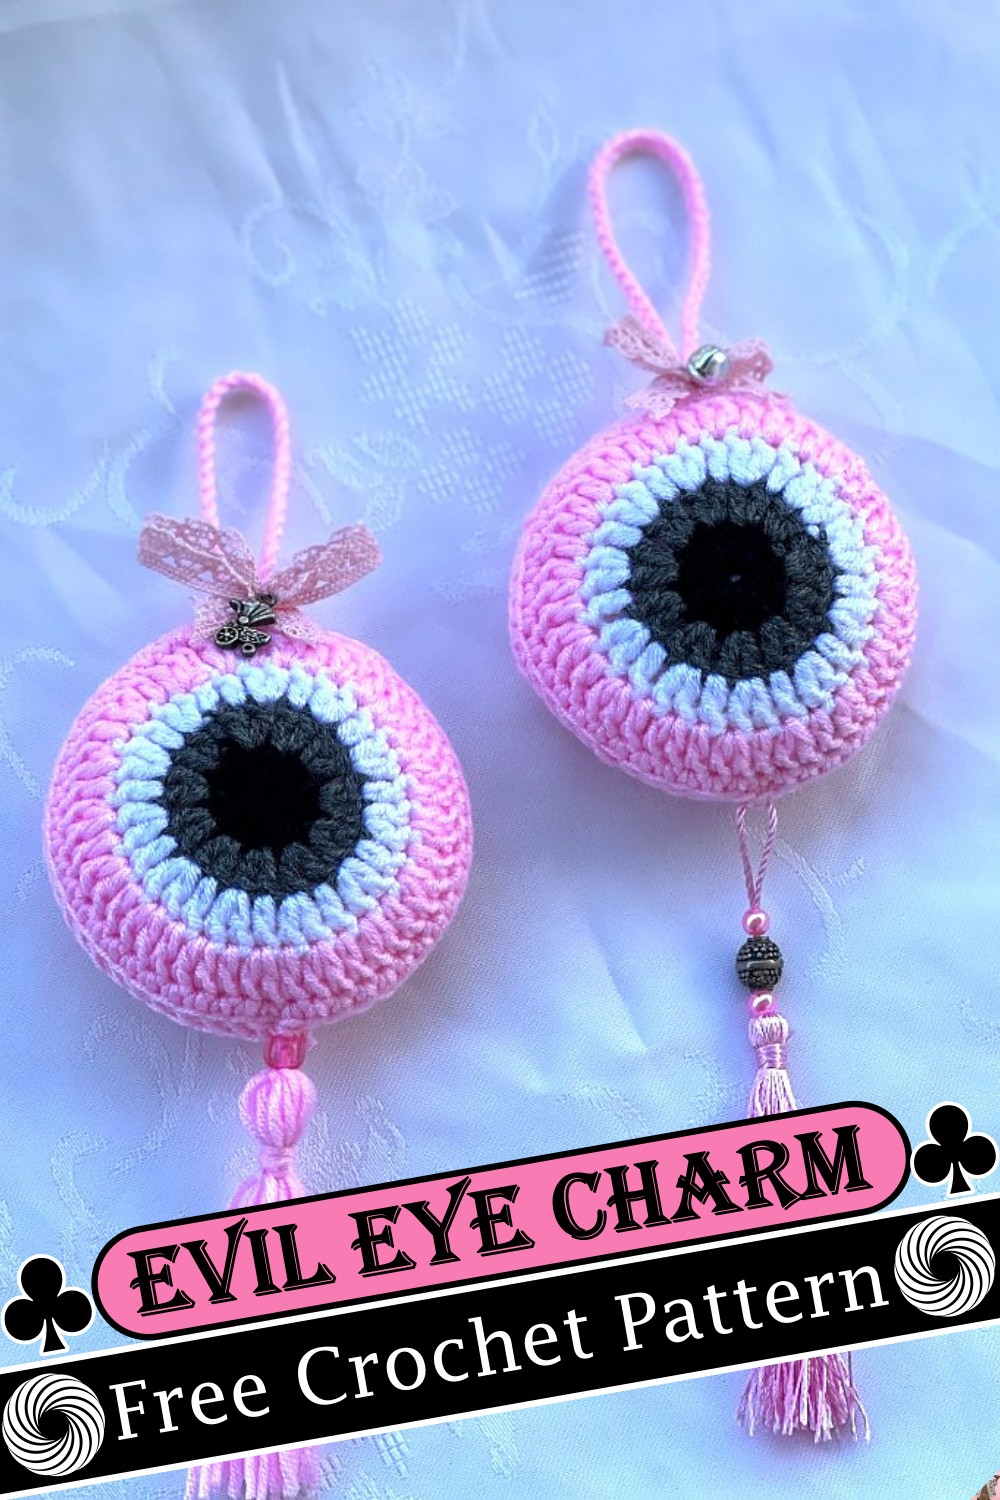 Evil Eye Charm